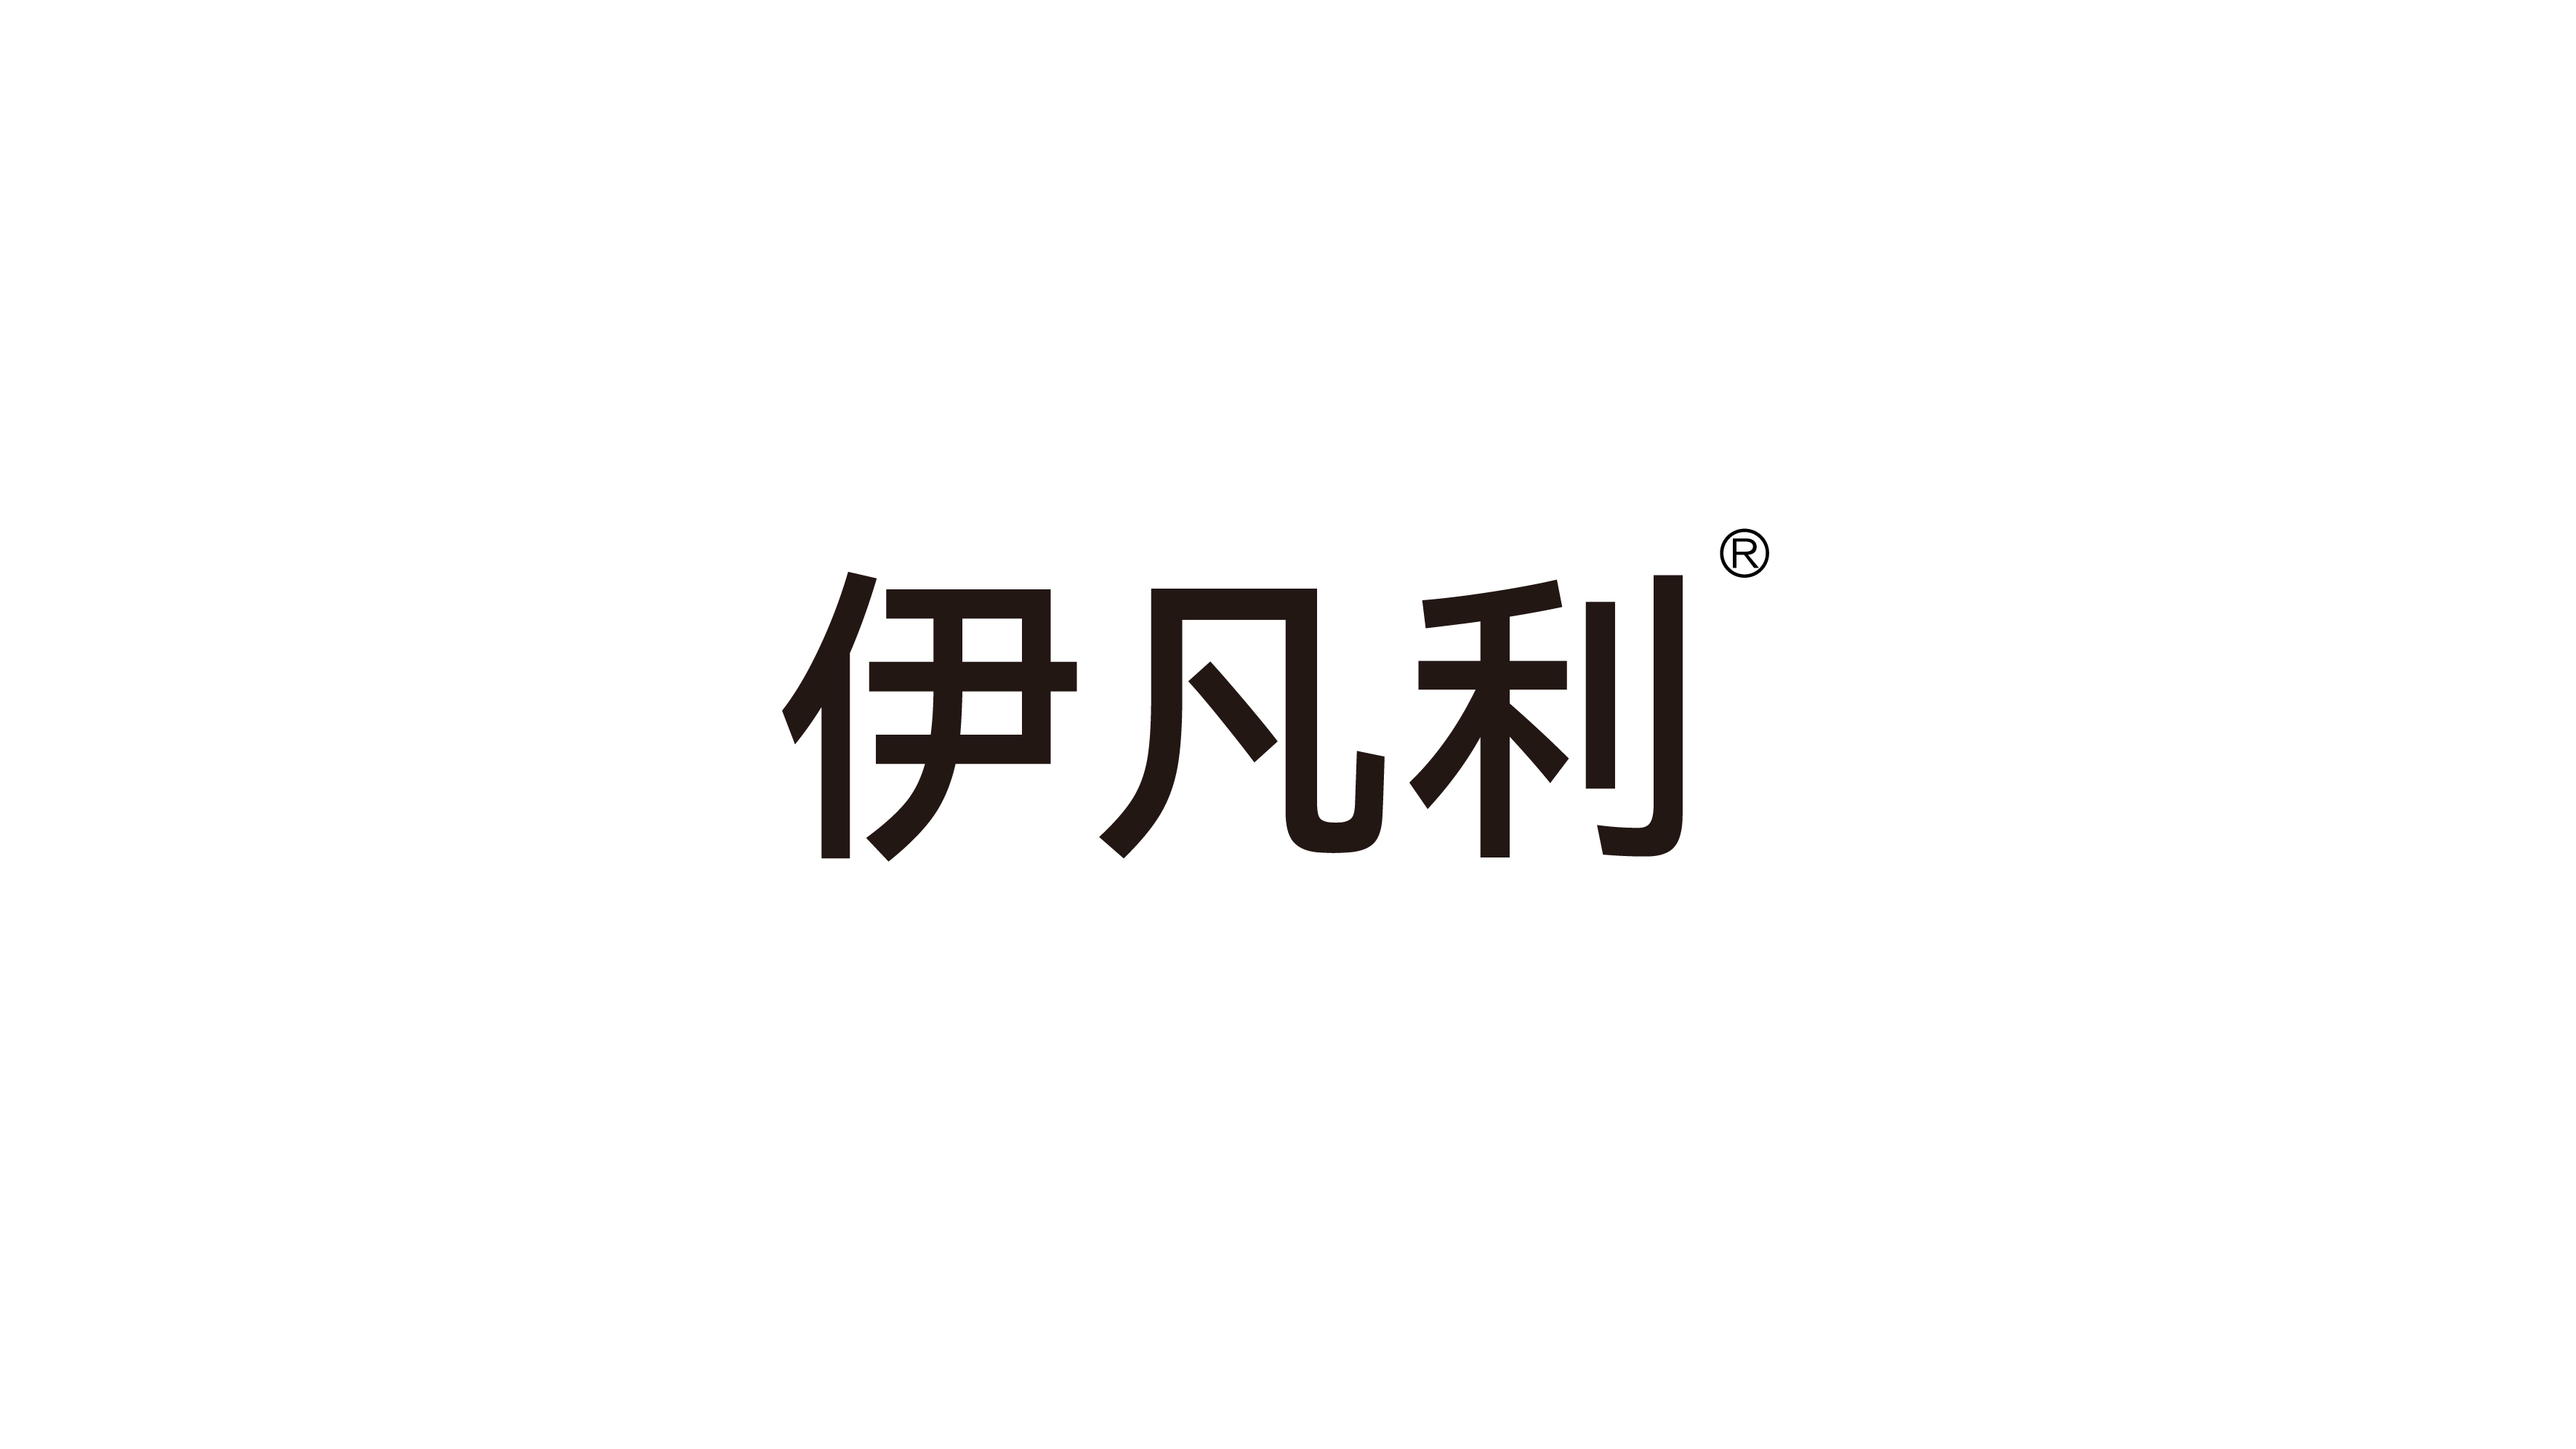 伊凡利logo.ai